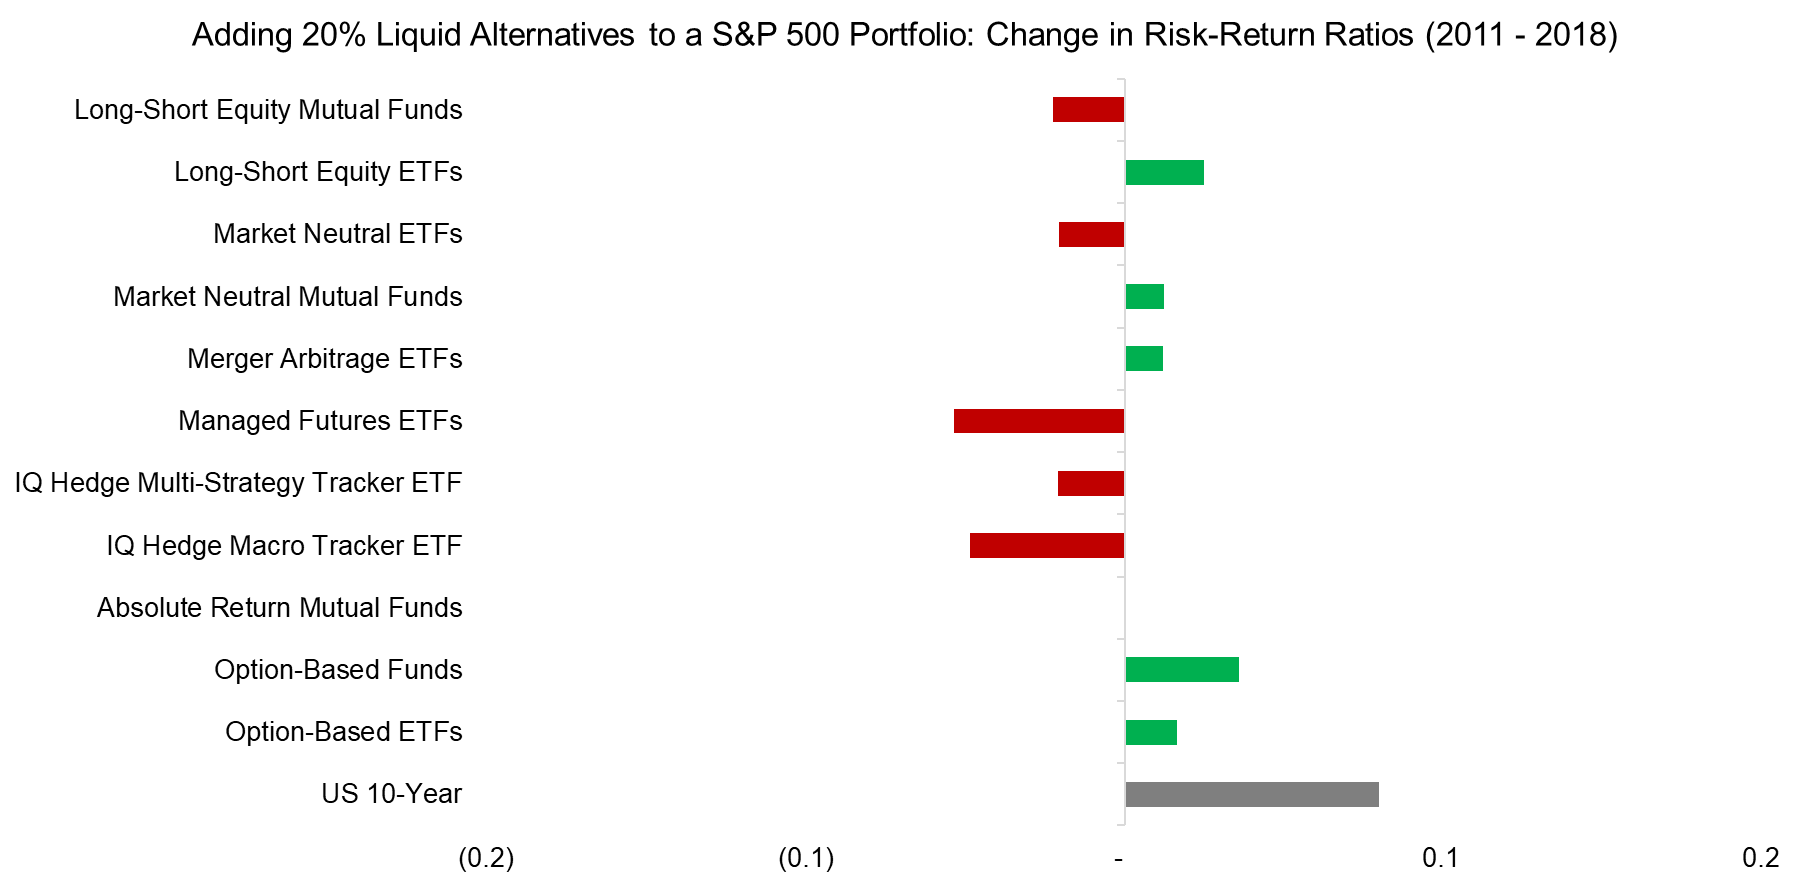 Adding 20% Liquid Alternatives to a S&P 500 Portfolio Change in Risk-Return Ratios (2011